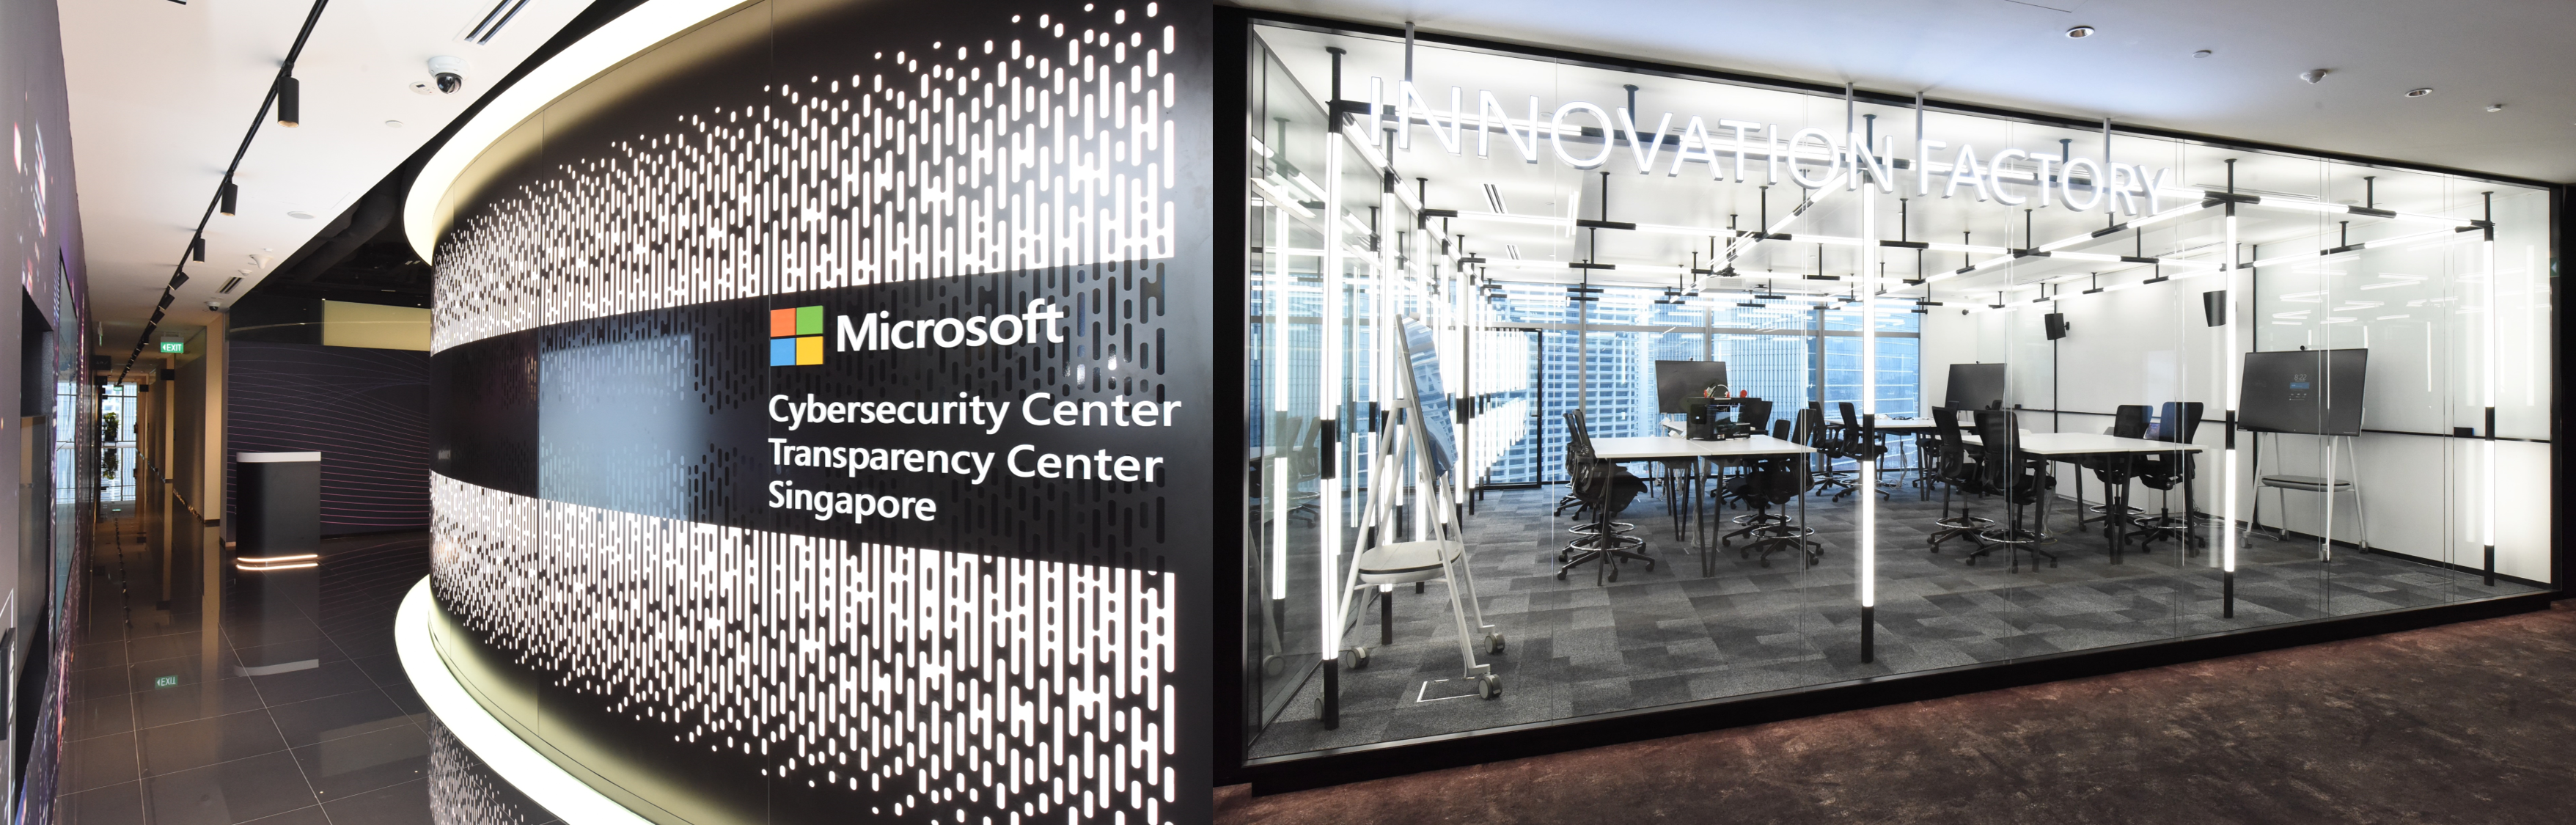 Microsoft Cybersecruity Center Transparency Center SG